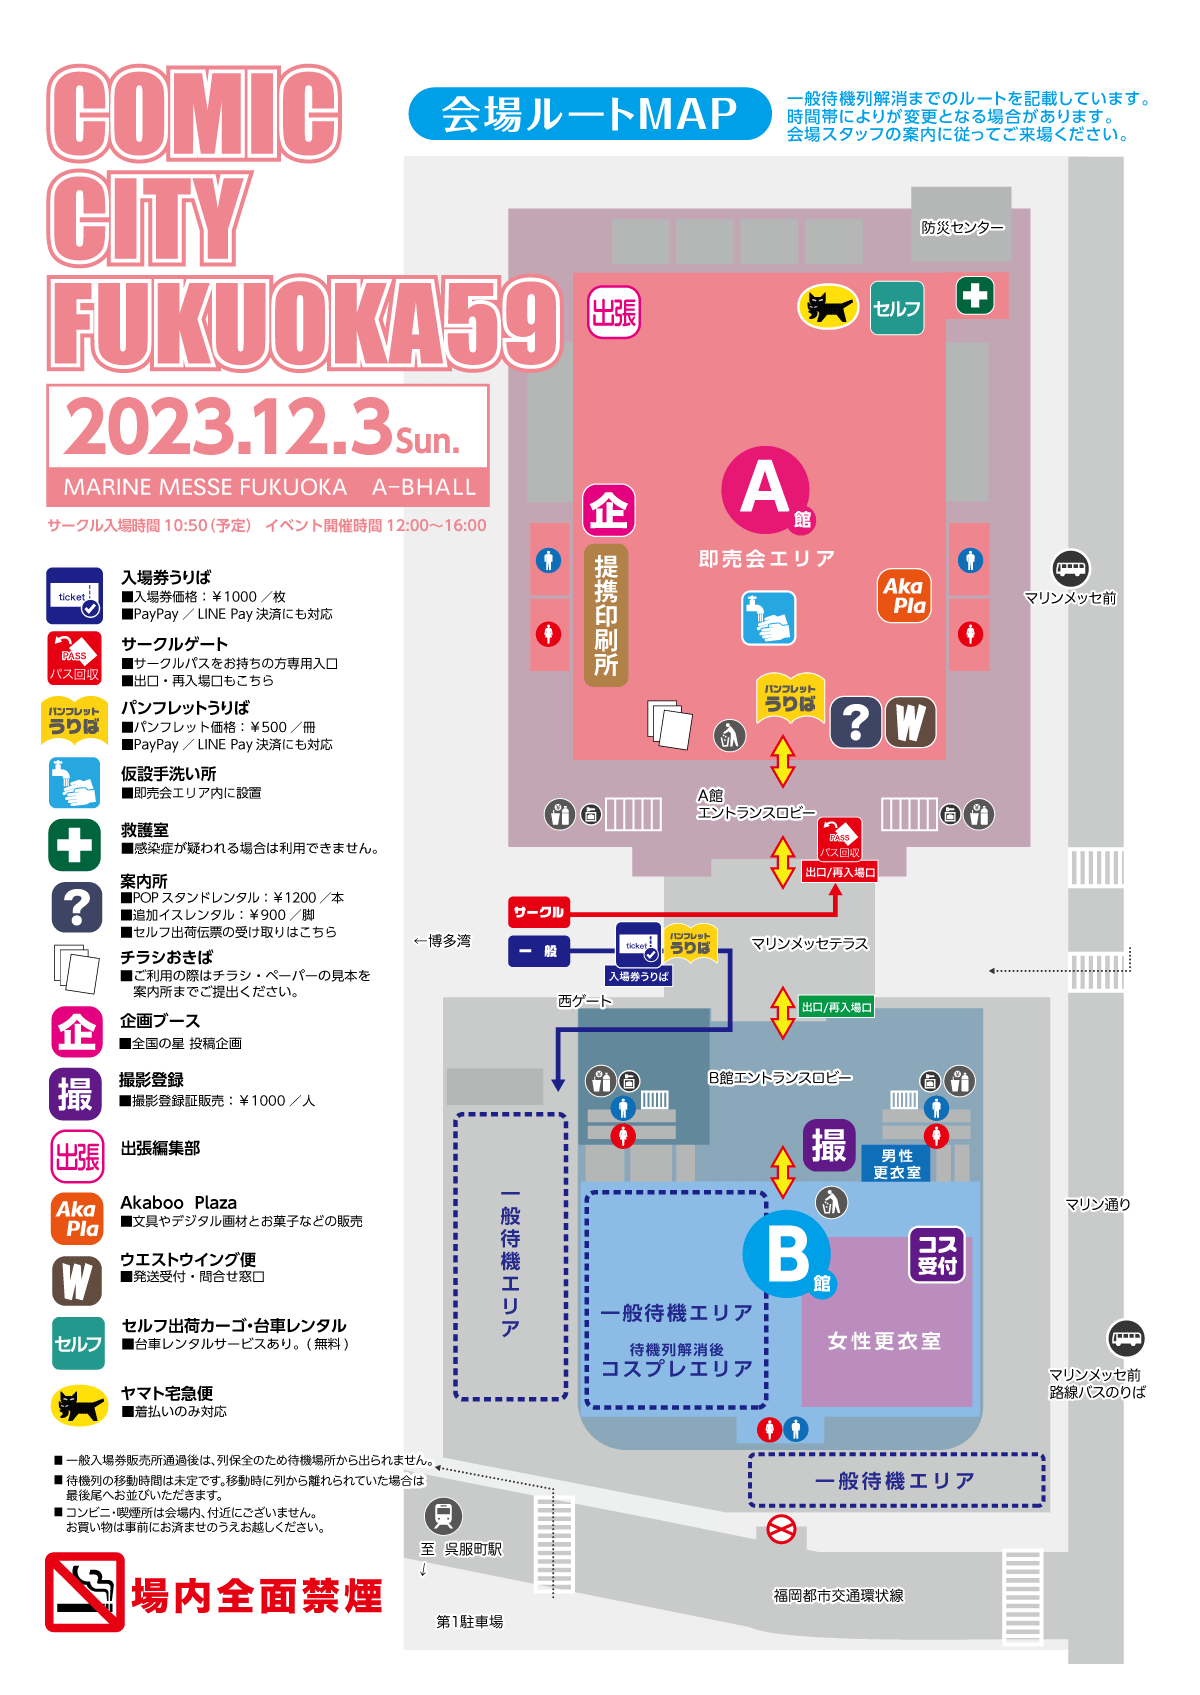 Miracle Festiv L 23 ドーム公演 Event Info